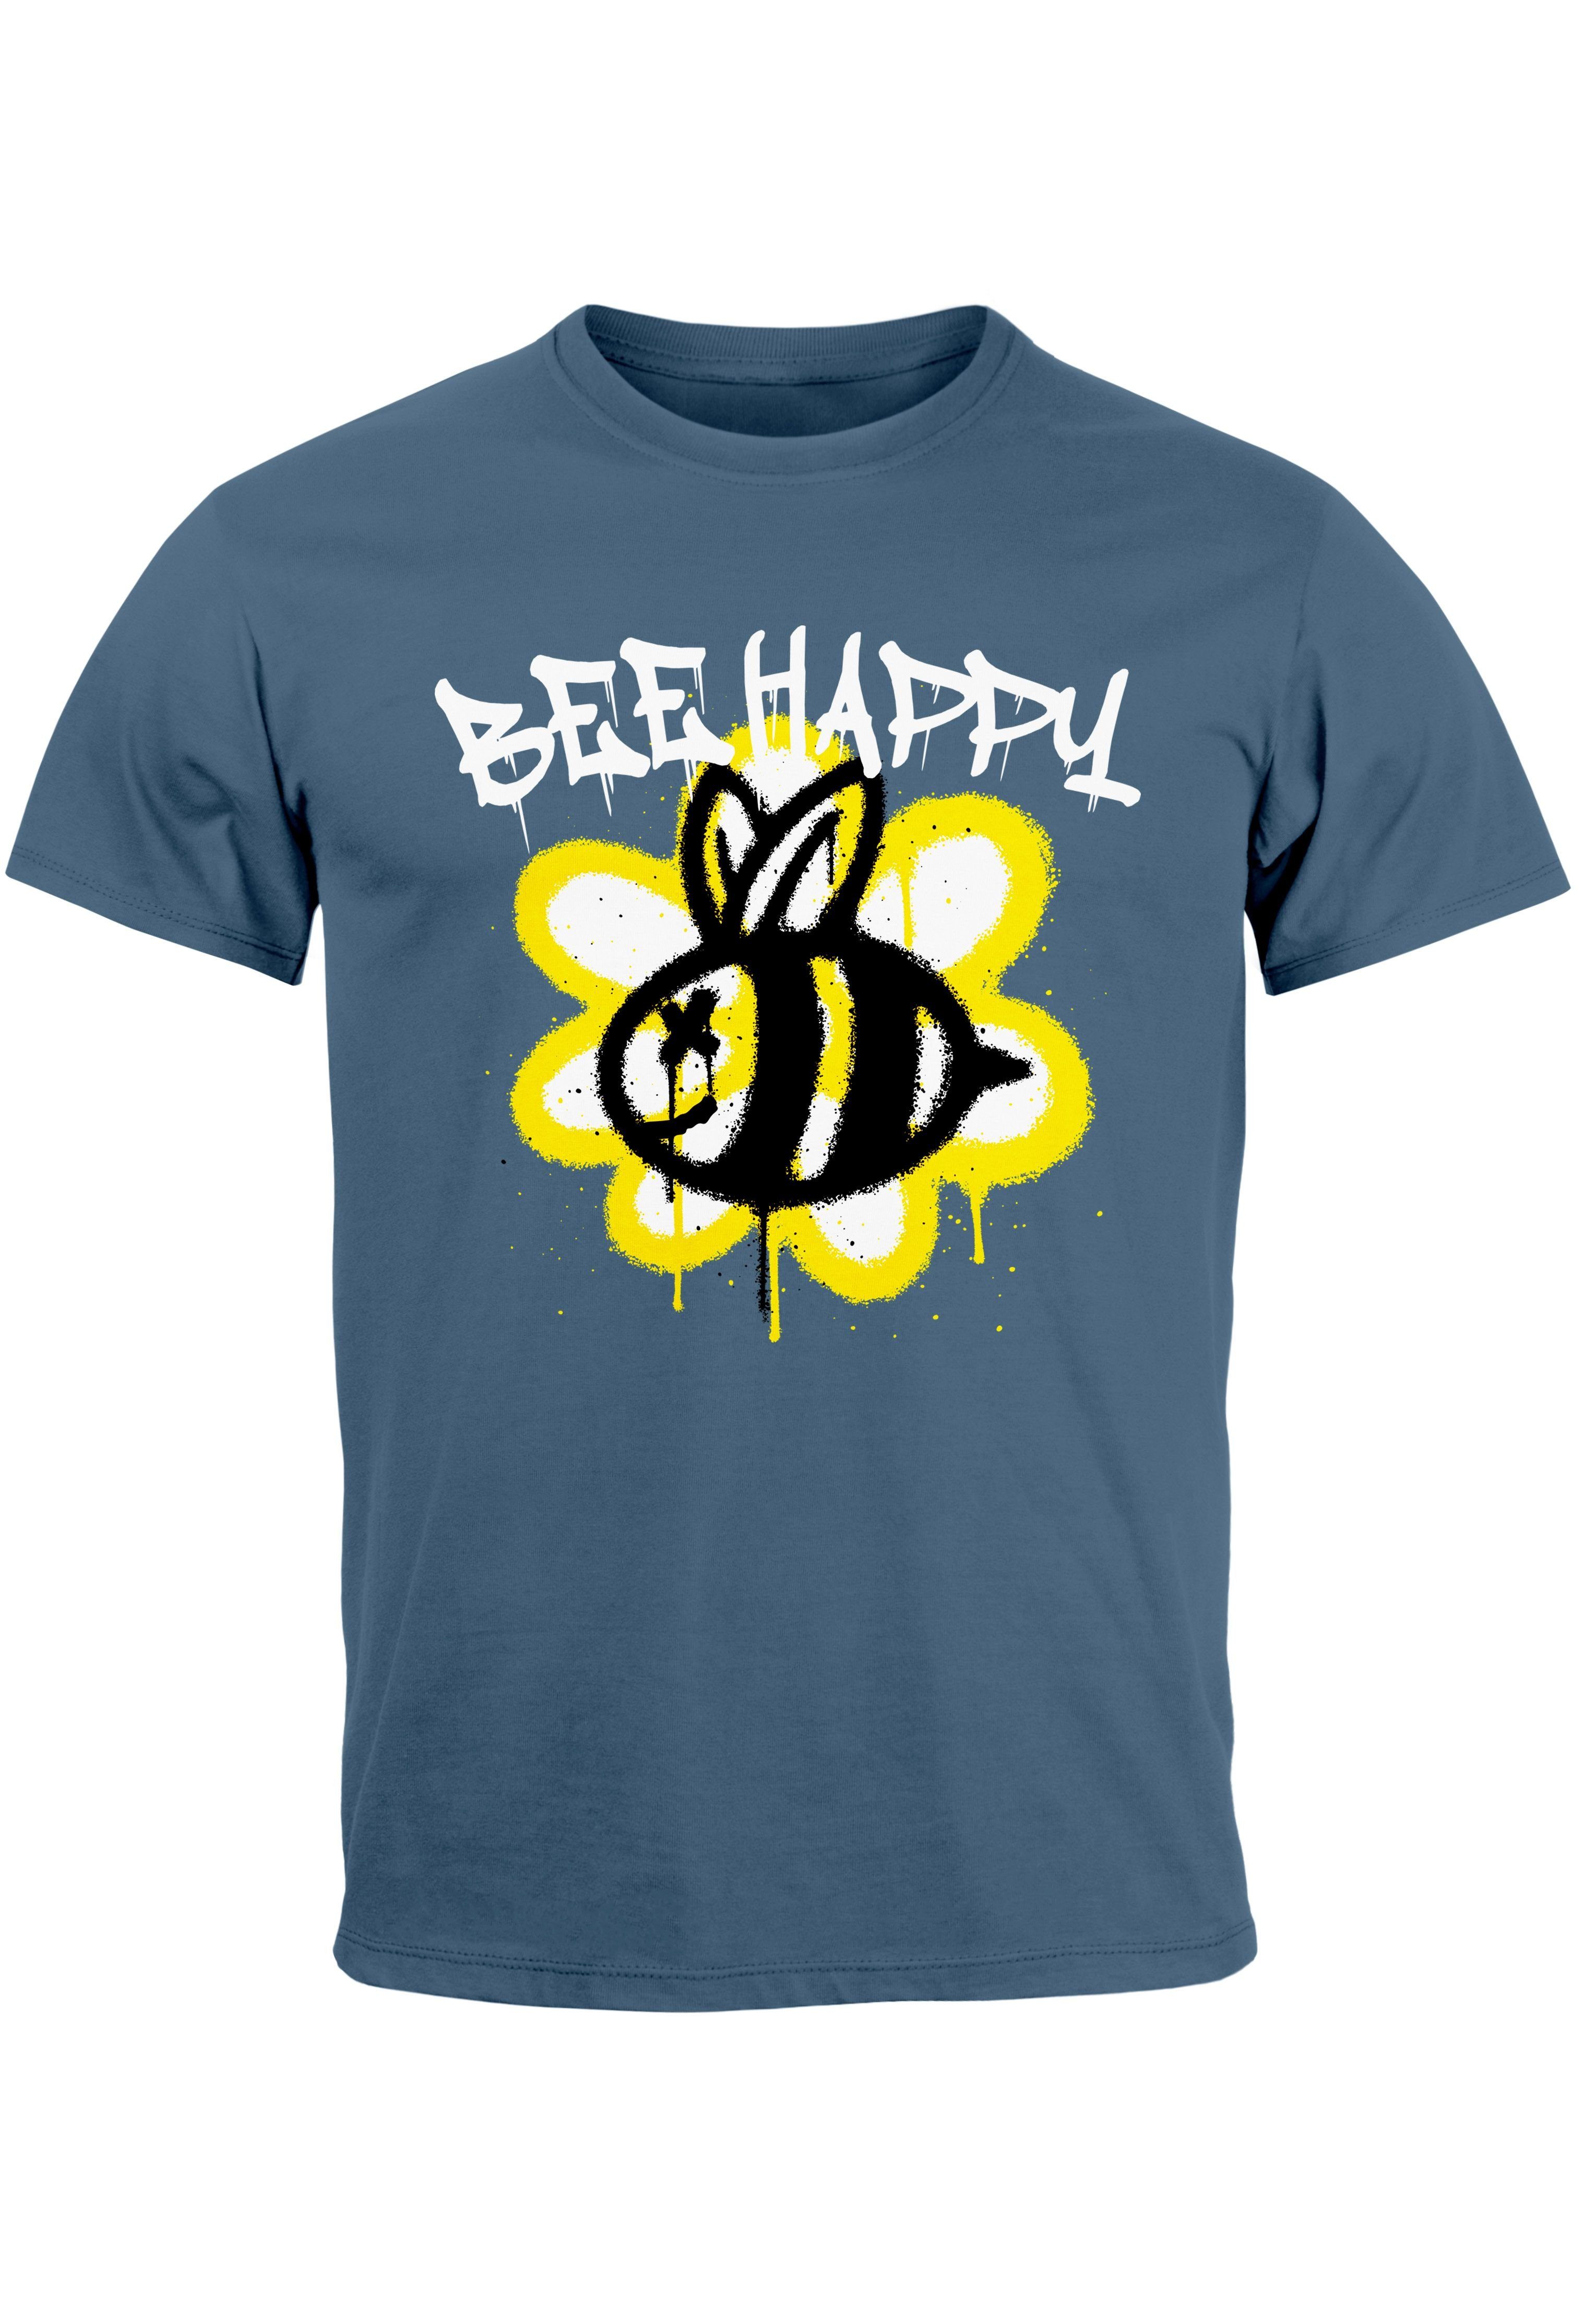 Neverless Print-Shirt Herren T-Shirt Aufdruck Bee Happy Biene Blume Graffiti SchriftzugFashi mit Print denim blue